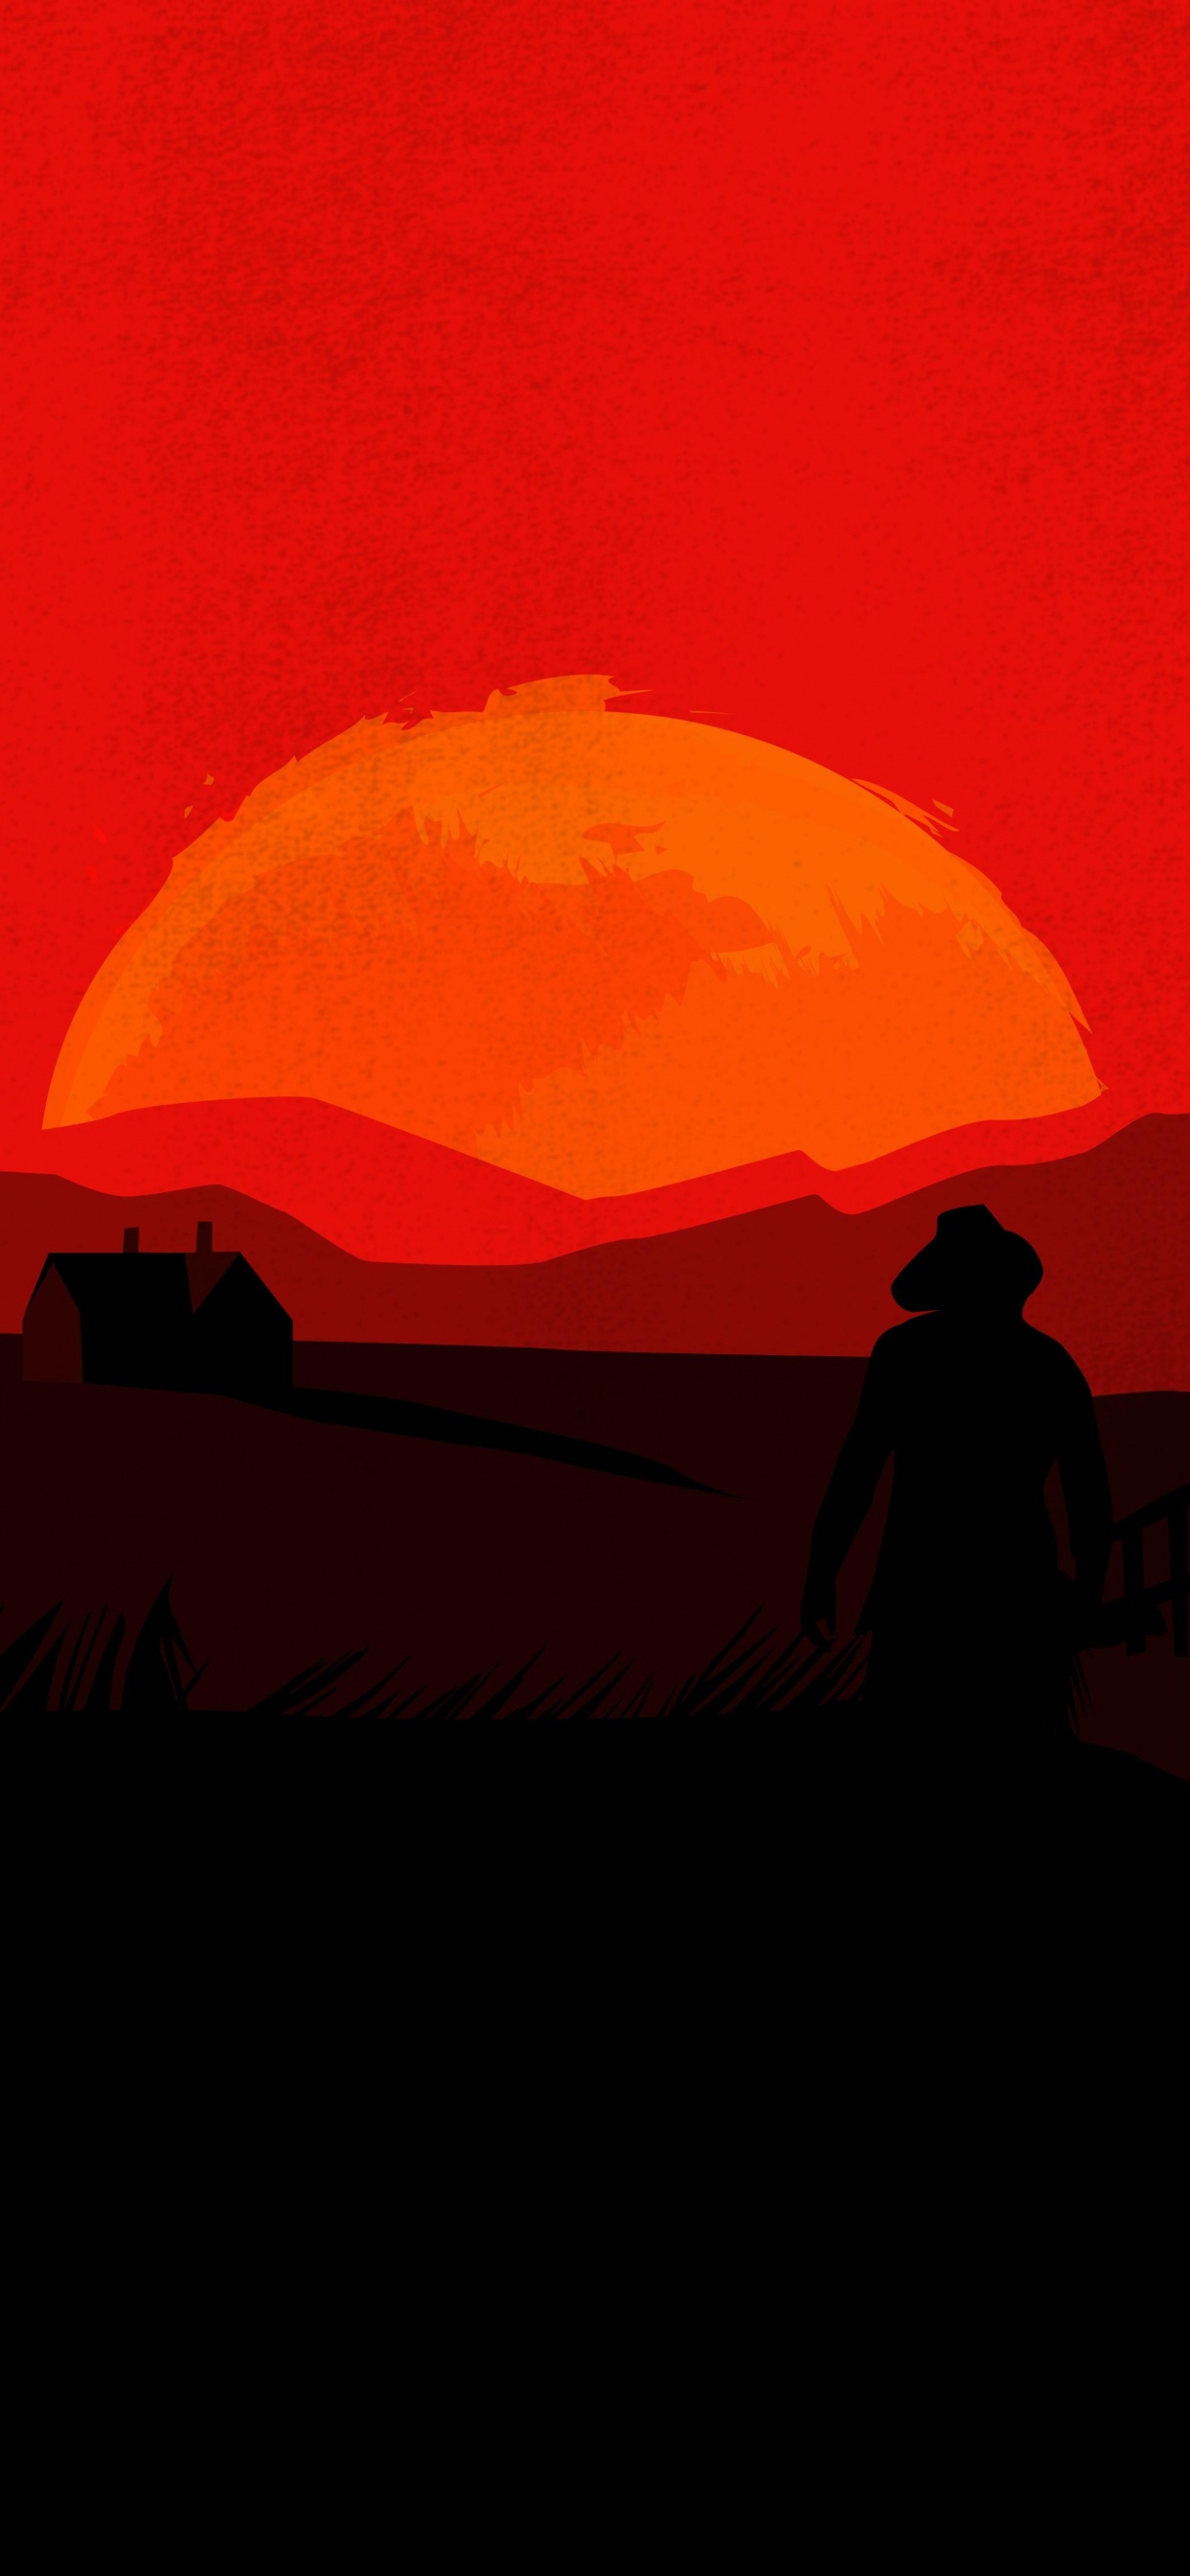 Red Dead Redemption 2, Red Dead Redemption, Afterglow, Sonnenuntergang, Sonnenaufgang. Wallpaper in 1242x2688 Resolution